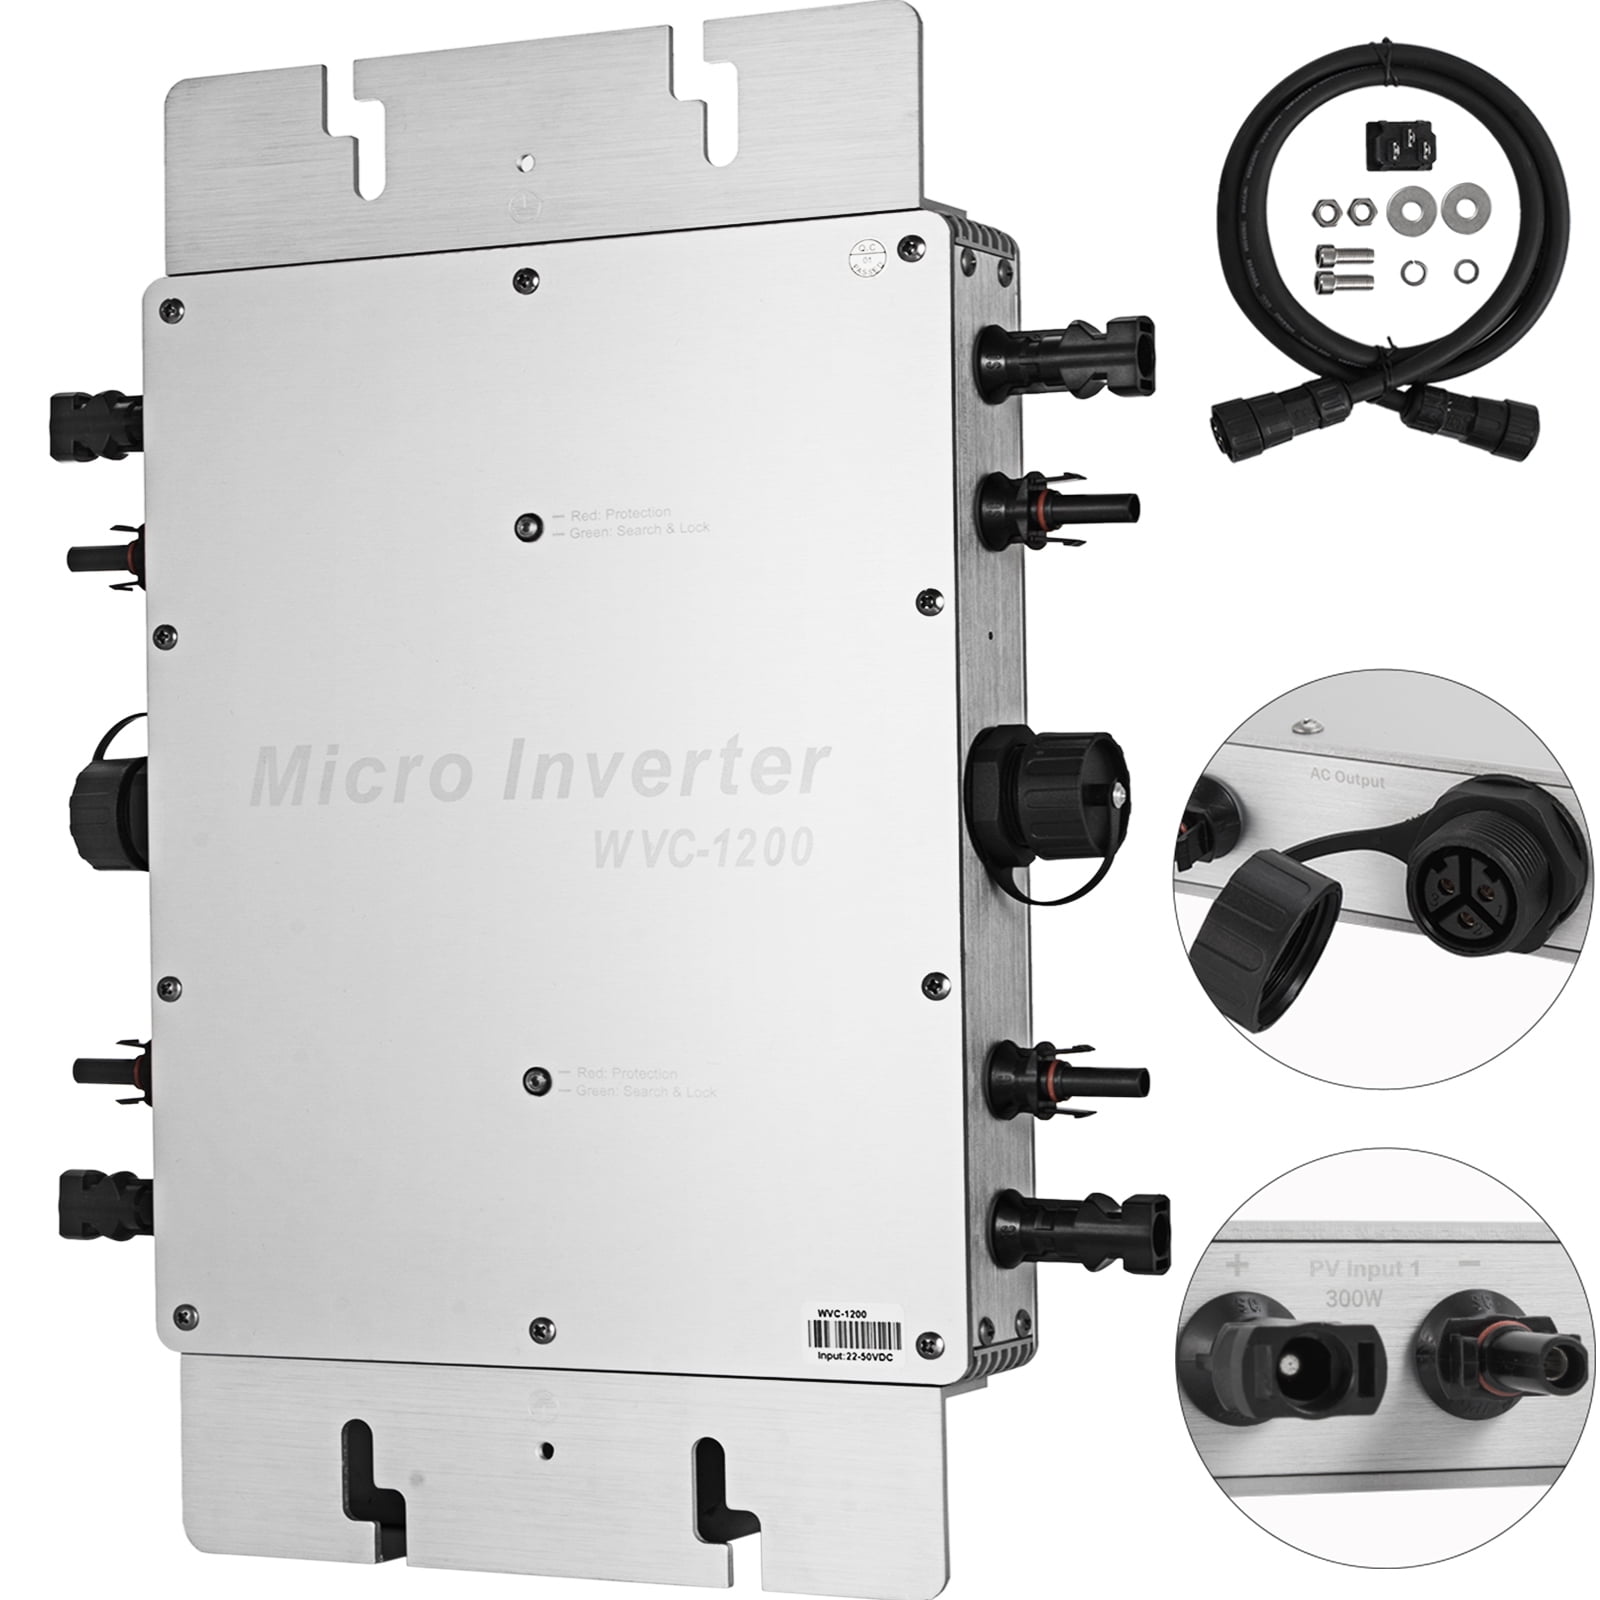 1200W MPPT Grid Tie Micro Solar Inverter 110V/220V Safe DC to AC Streamline 